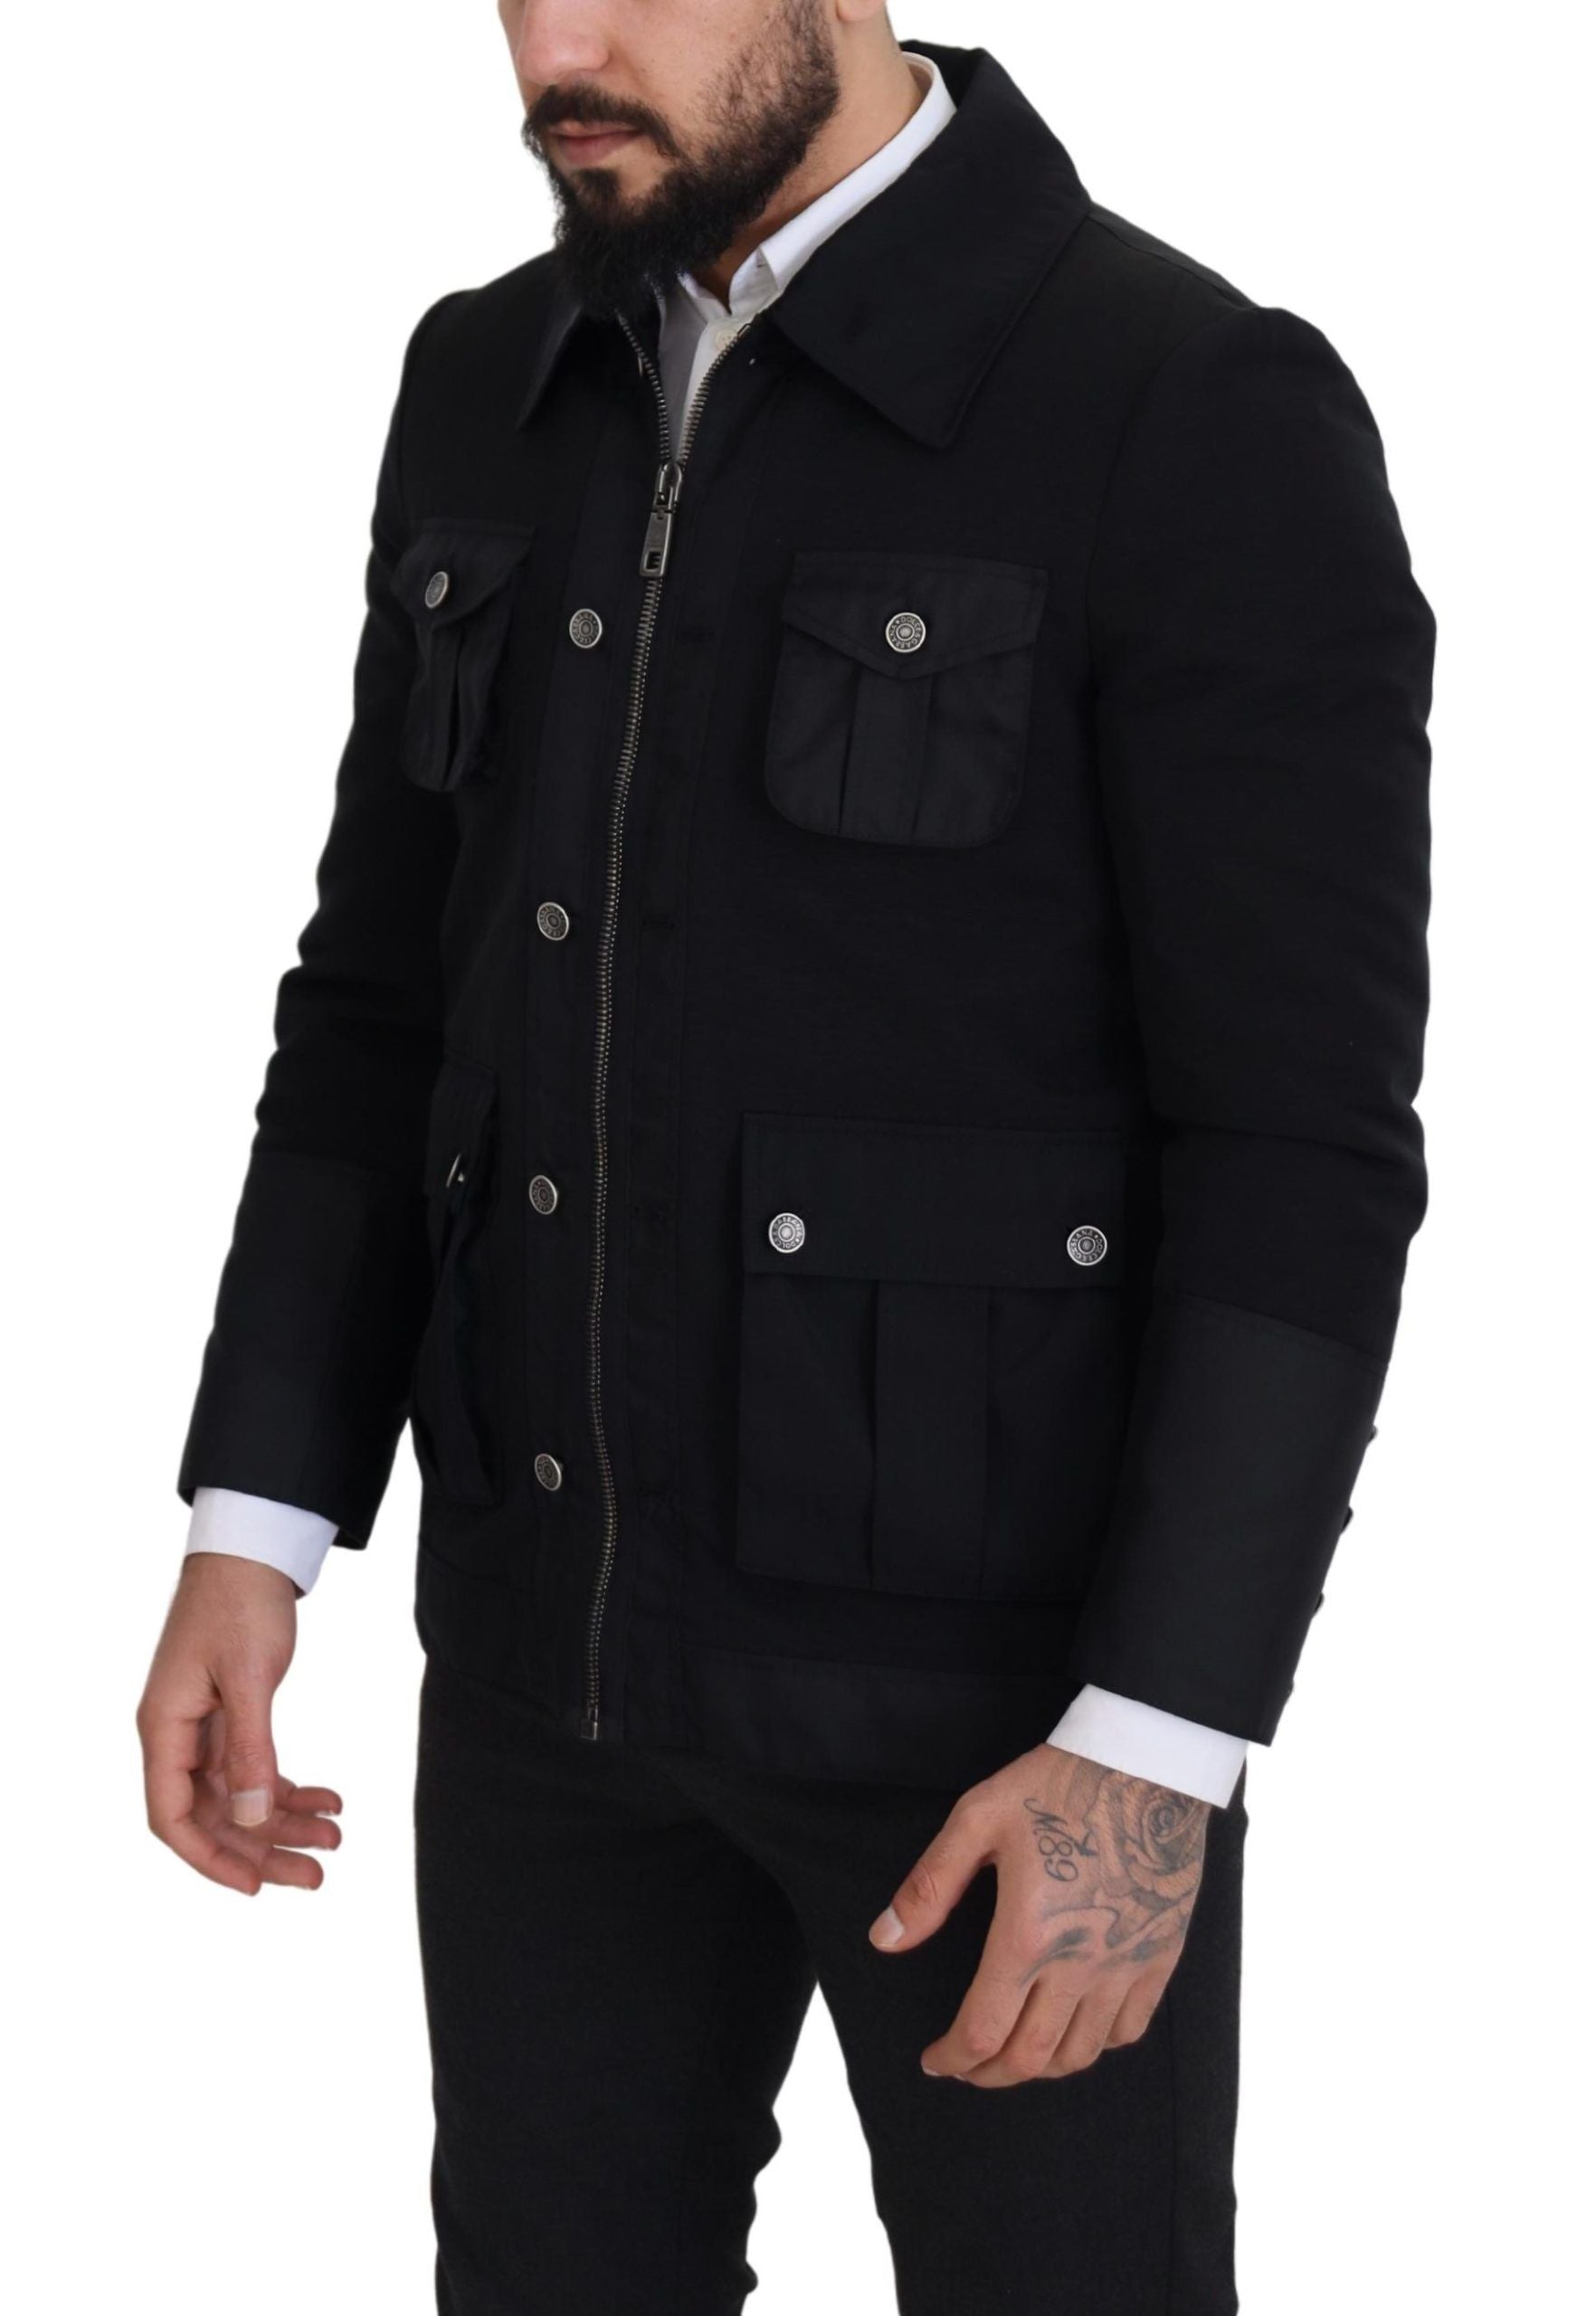 Dolce & Gabbana Elegante chaqueta de mezcla de lana negra con cremallera completa